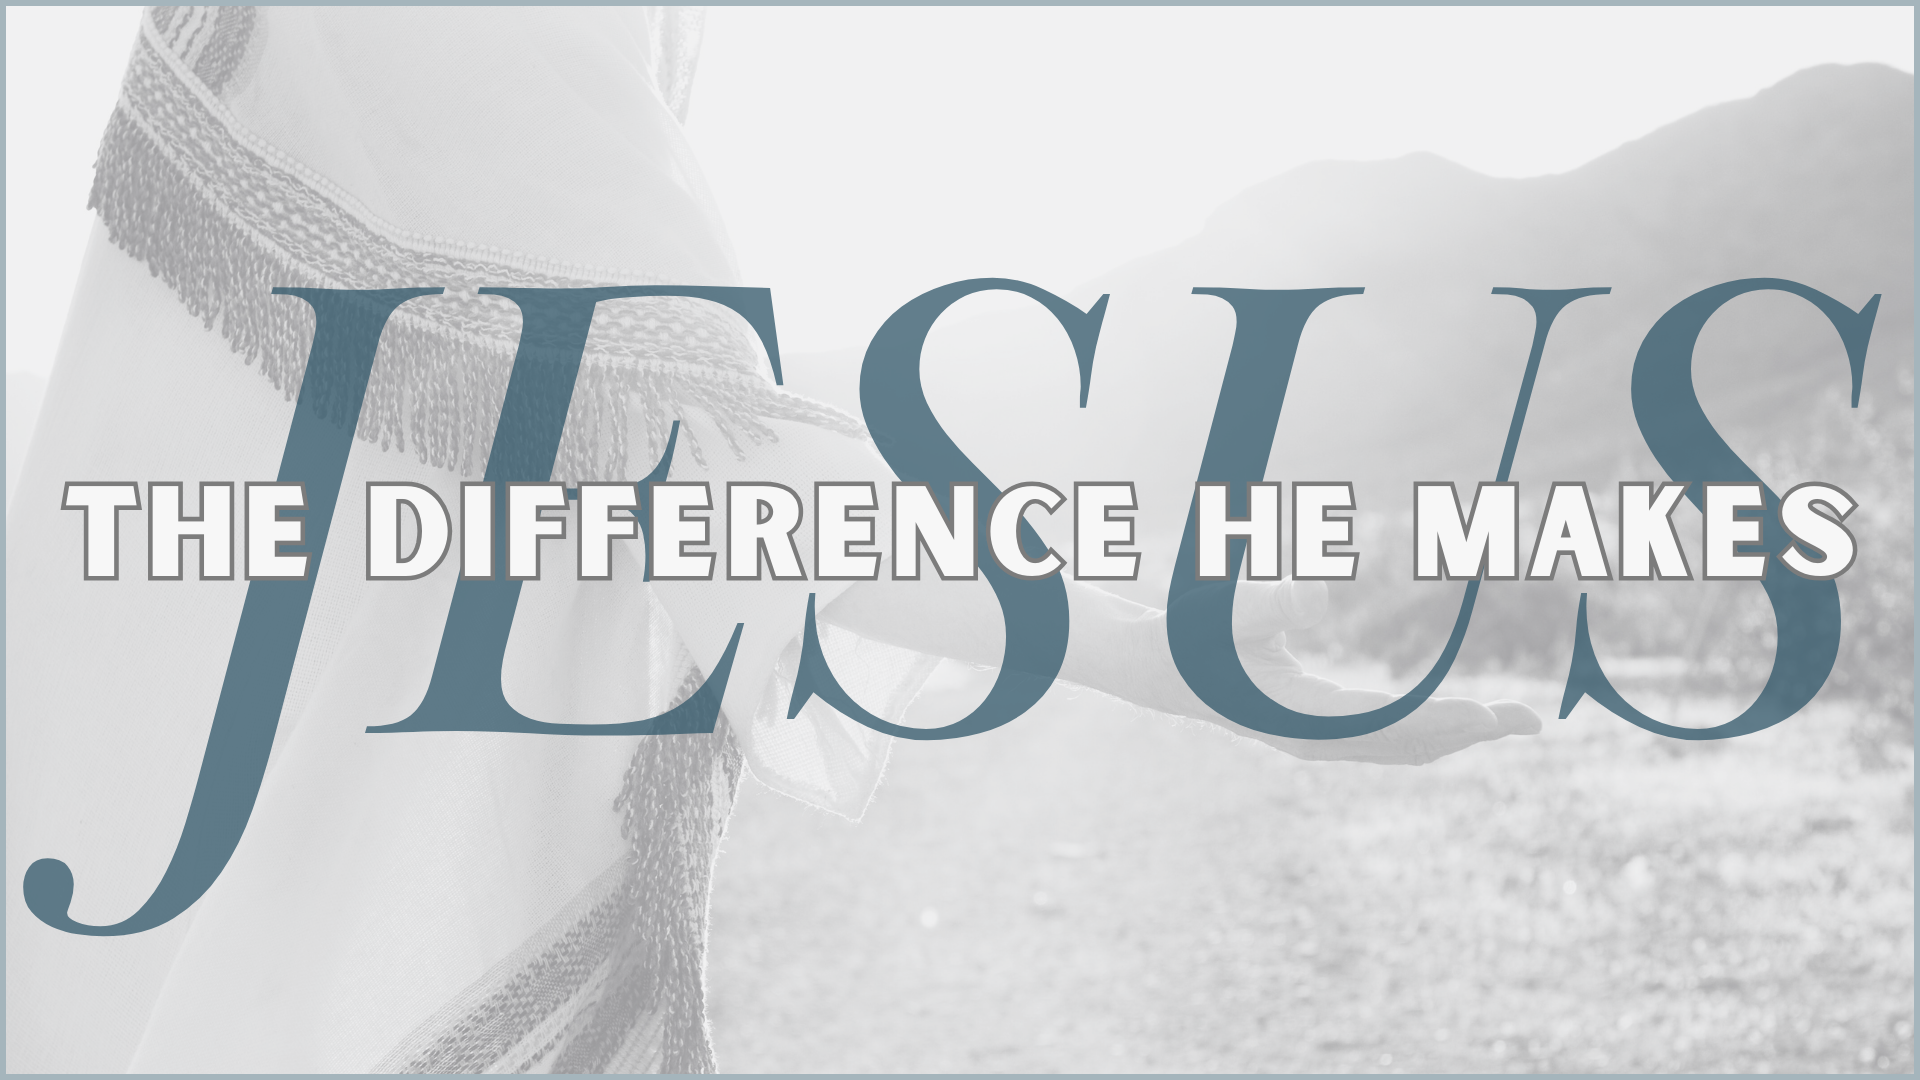 He satisfies our need to Belong